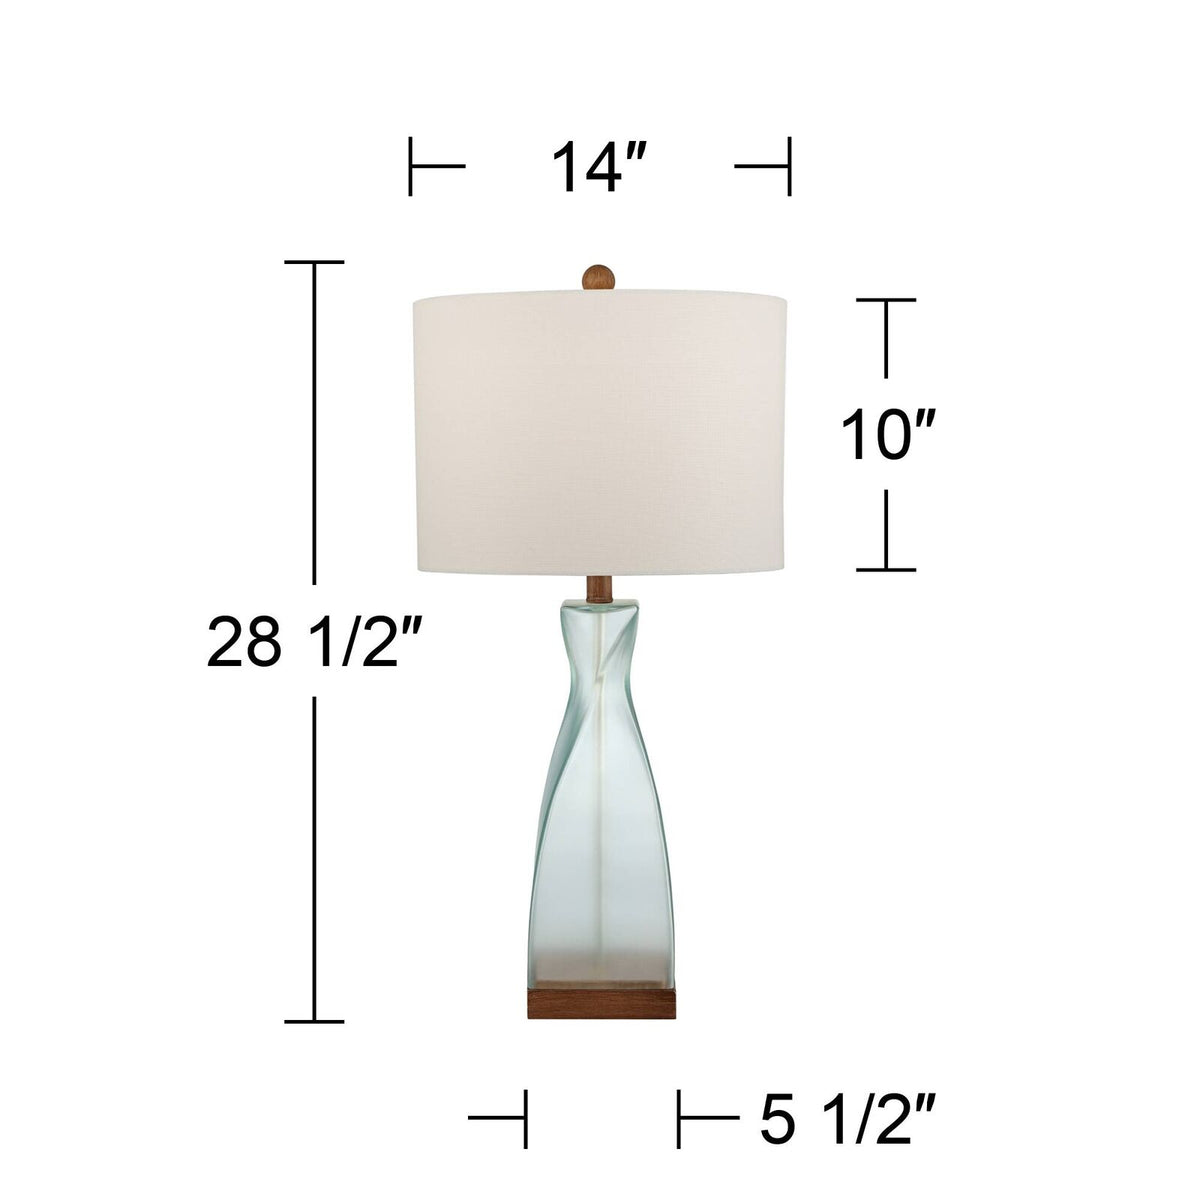 Set of 2 Modern Table Lamps Coastal Bedroom Living Room Decor Lighting